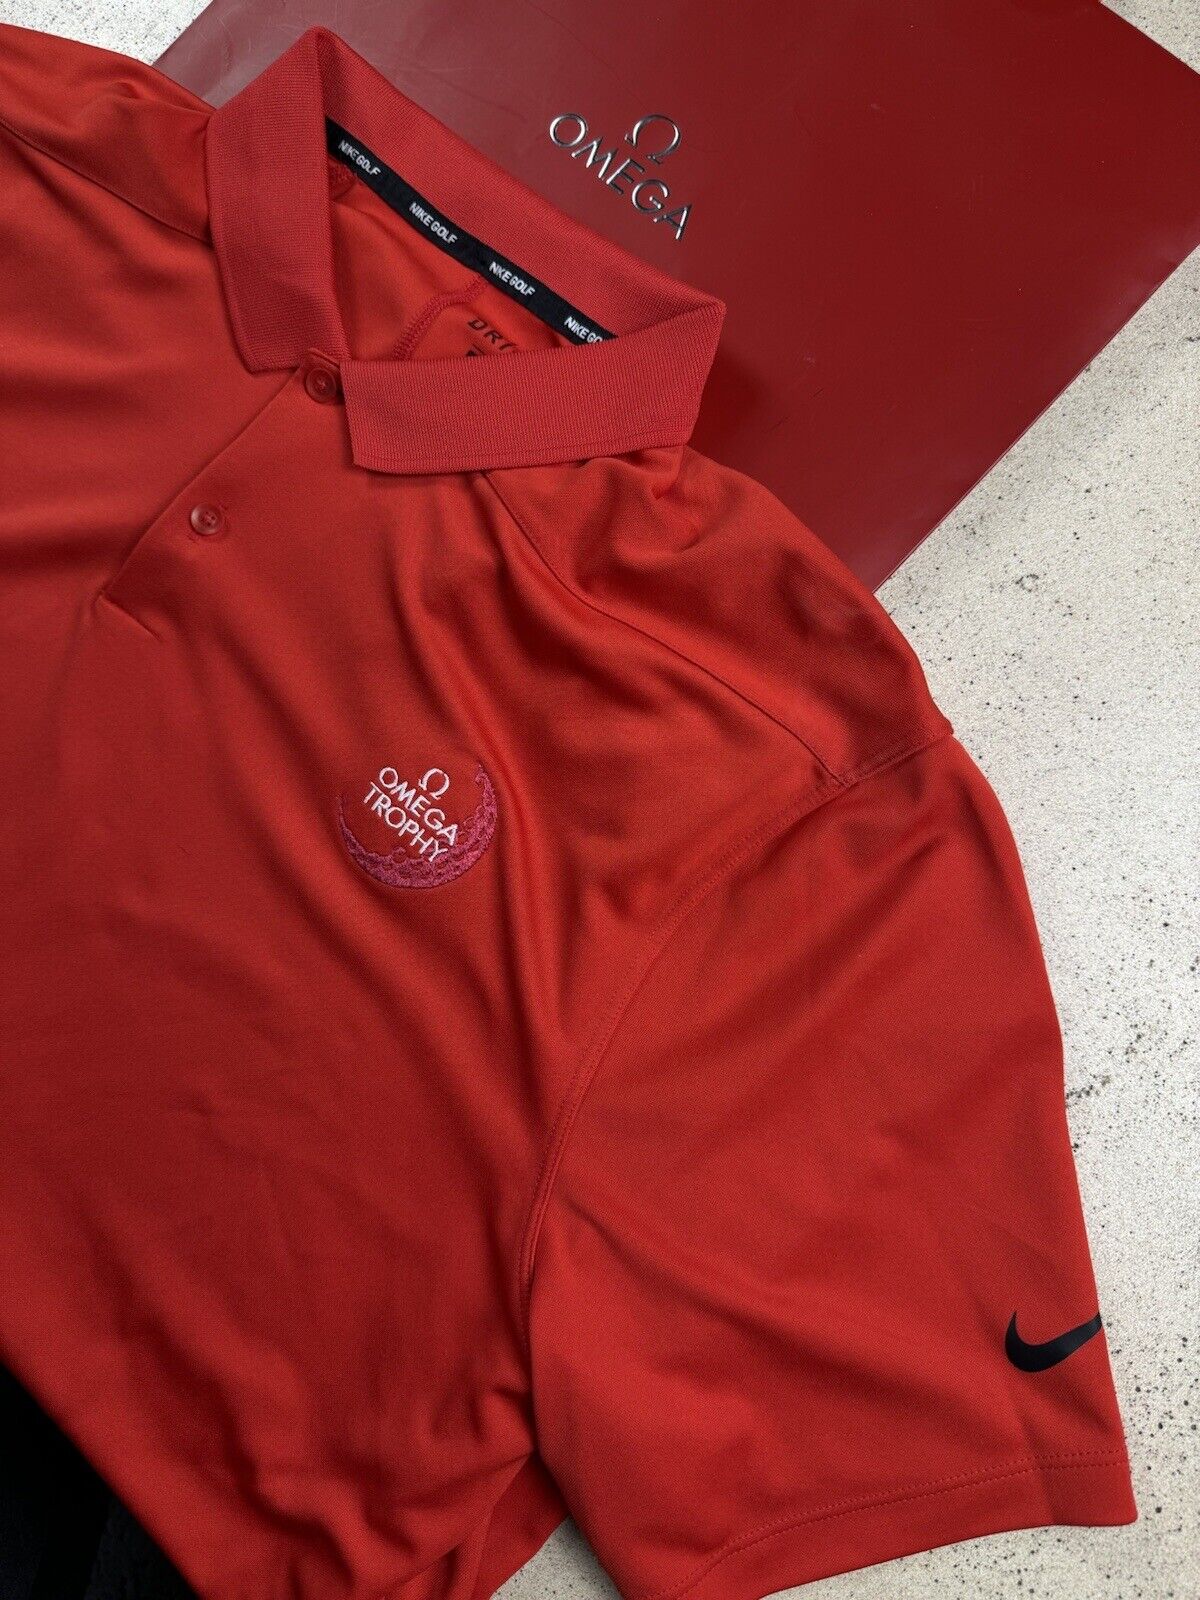 OMEGA Watch Golf Shirt Nike Mens XL Pre-Owned